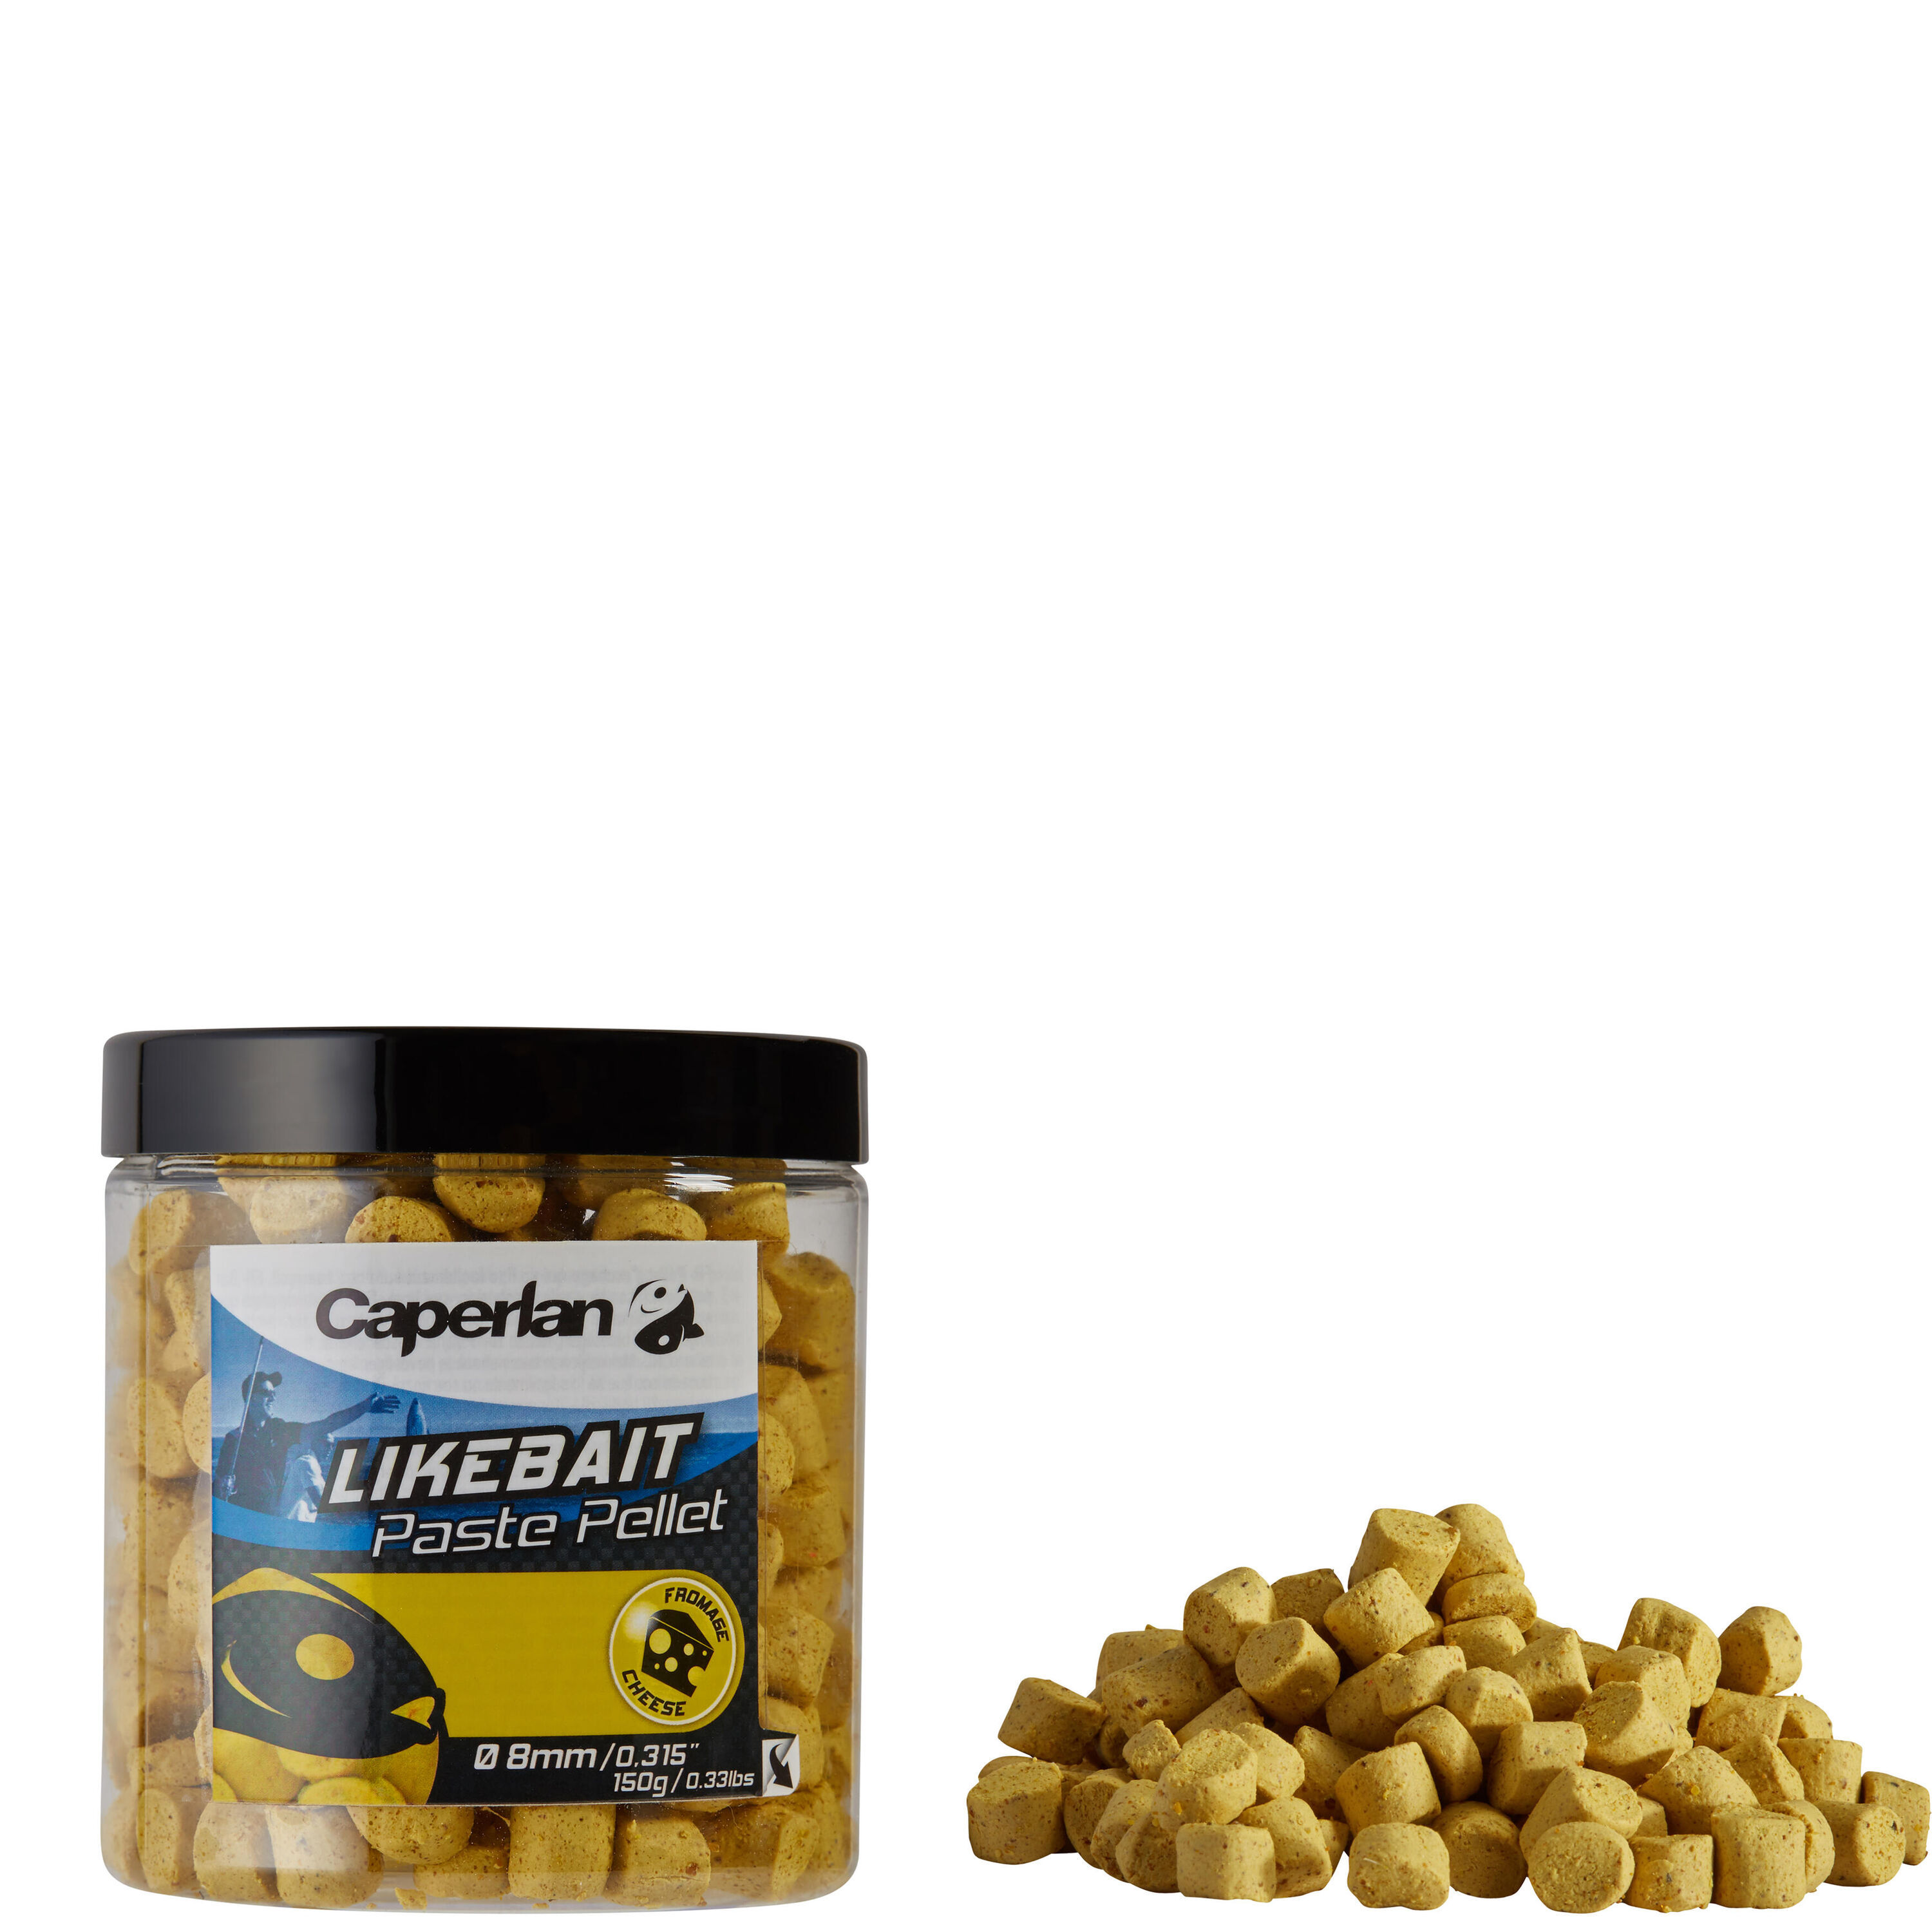 CAPERLAN Paste pellet cheese 150 g sea fishing bait